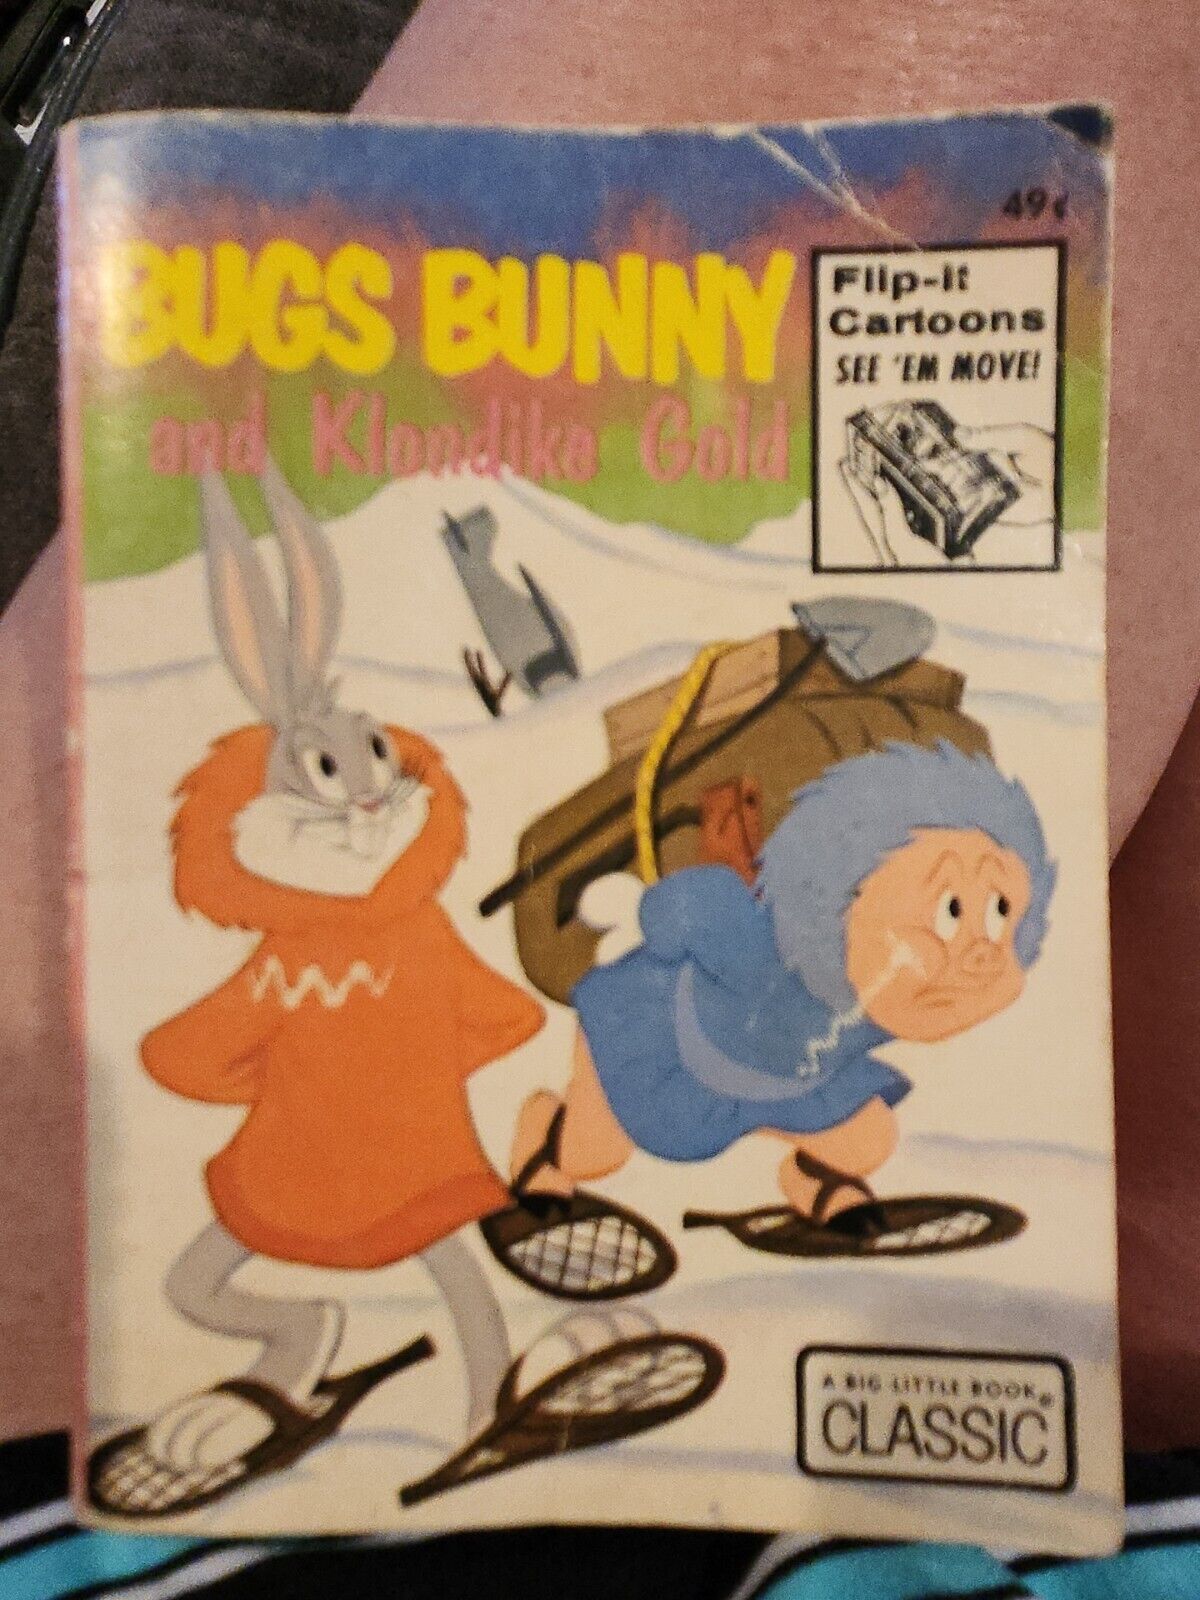 Bugs Bunny And Klondike Gold (A Big Little Book Classic 1974) Flip It Cartoons